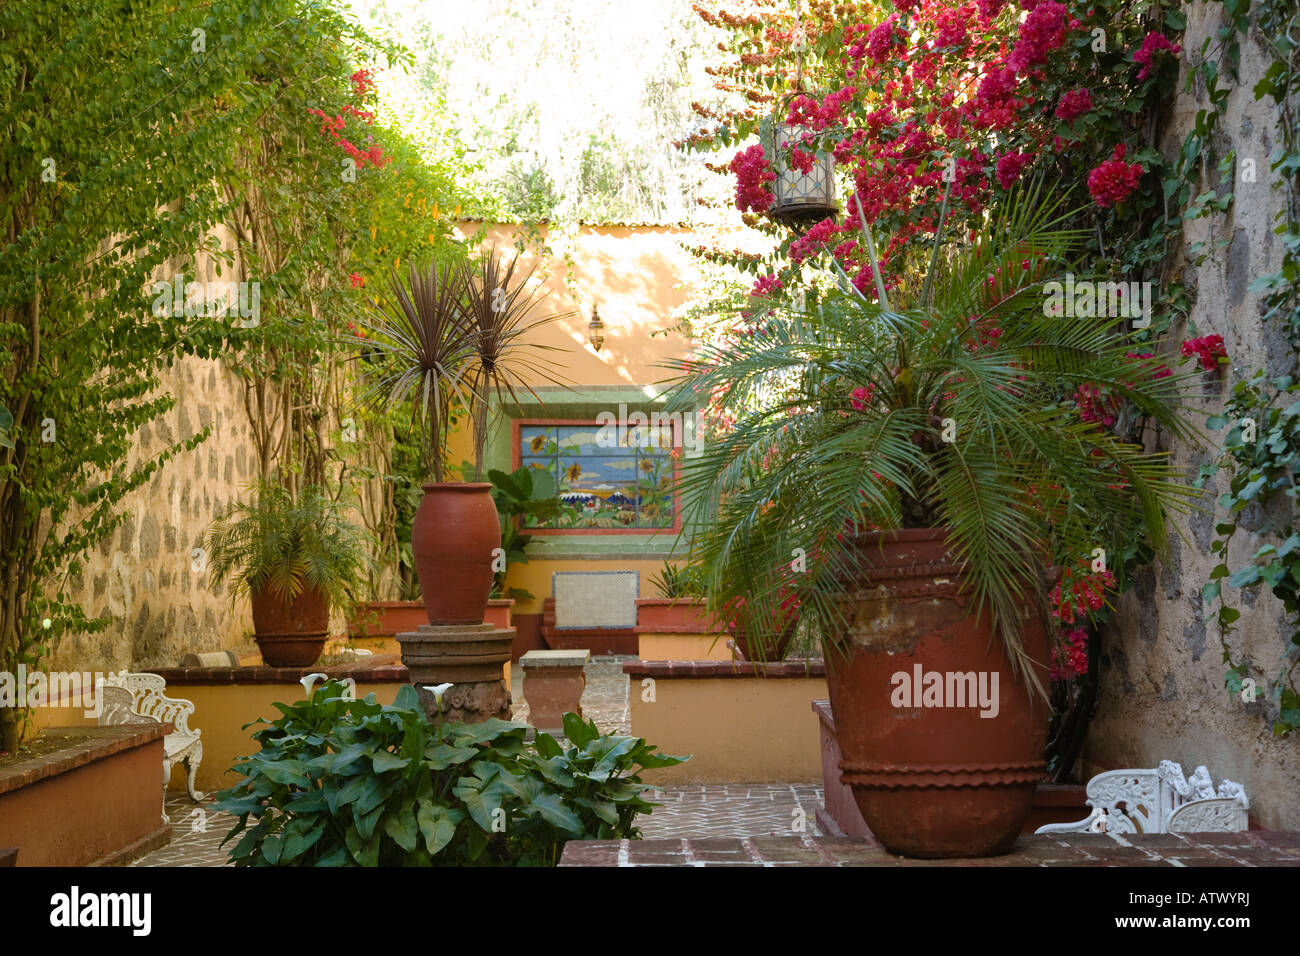 Mexique Guanajuato plantes en pot en verre teinté de bancs dans un jardin italien ex hacienda de San Gabriel de Barrera Banque D'Images